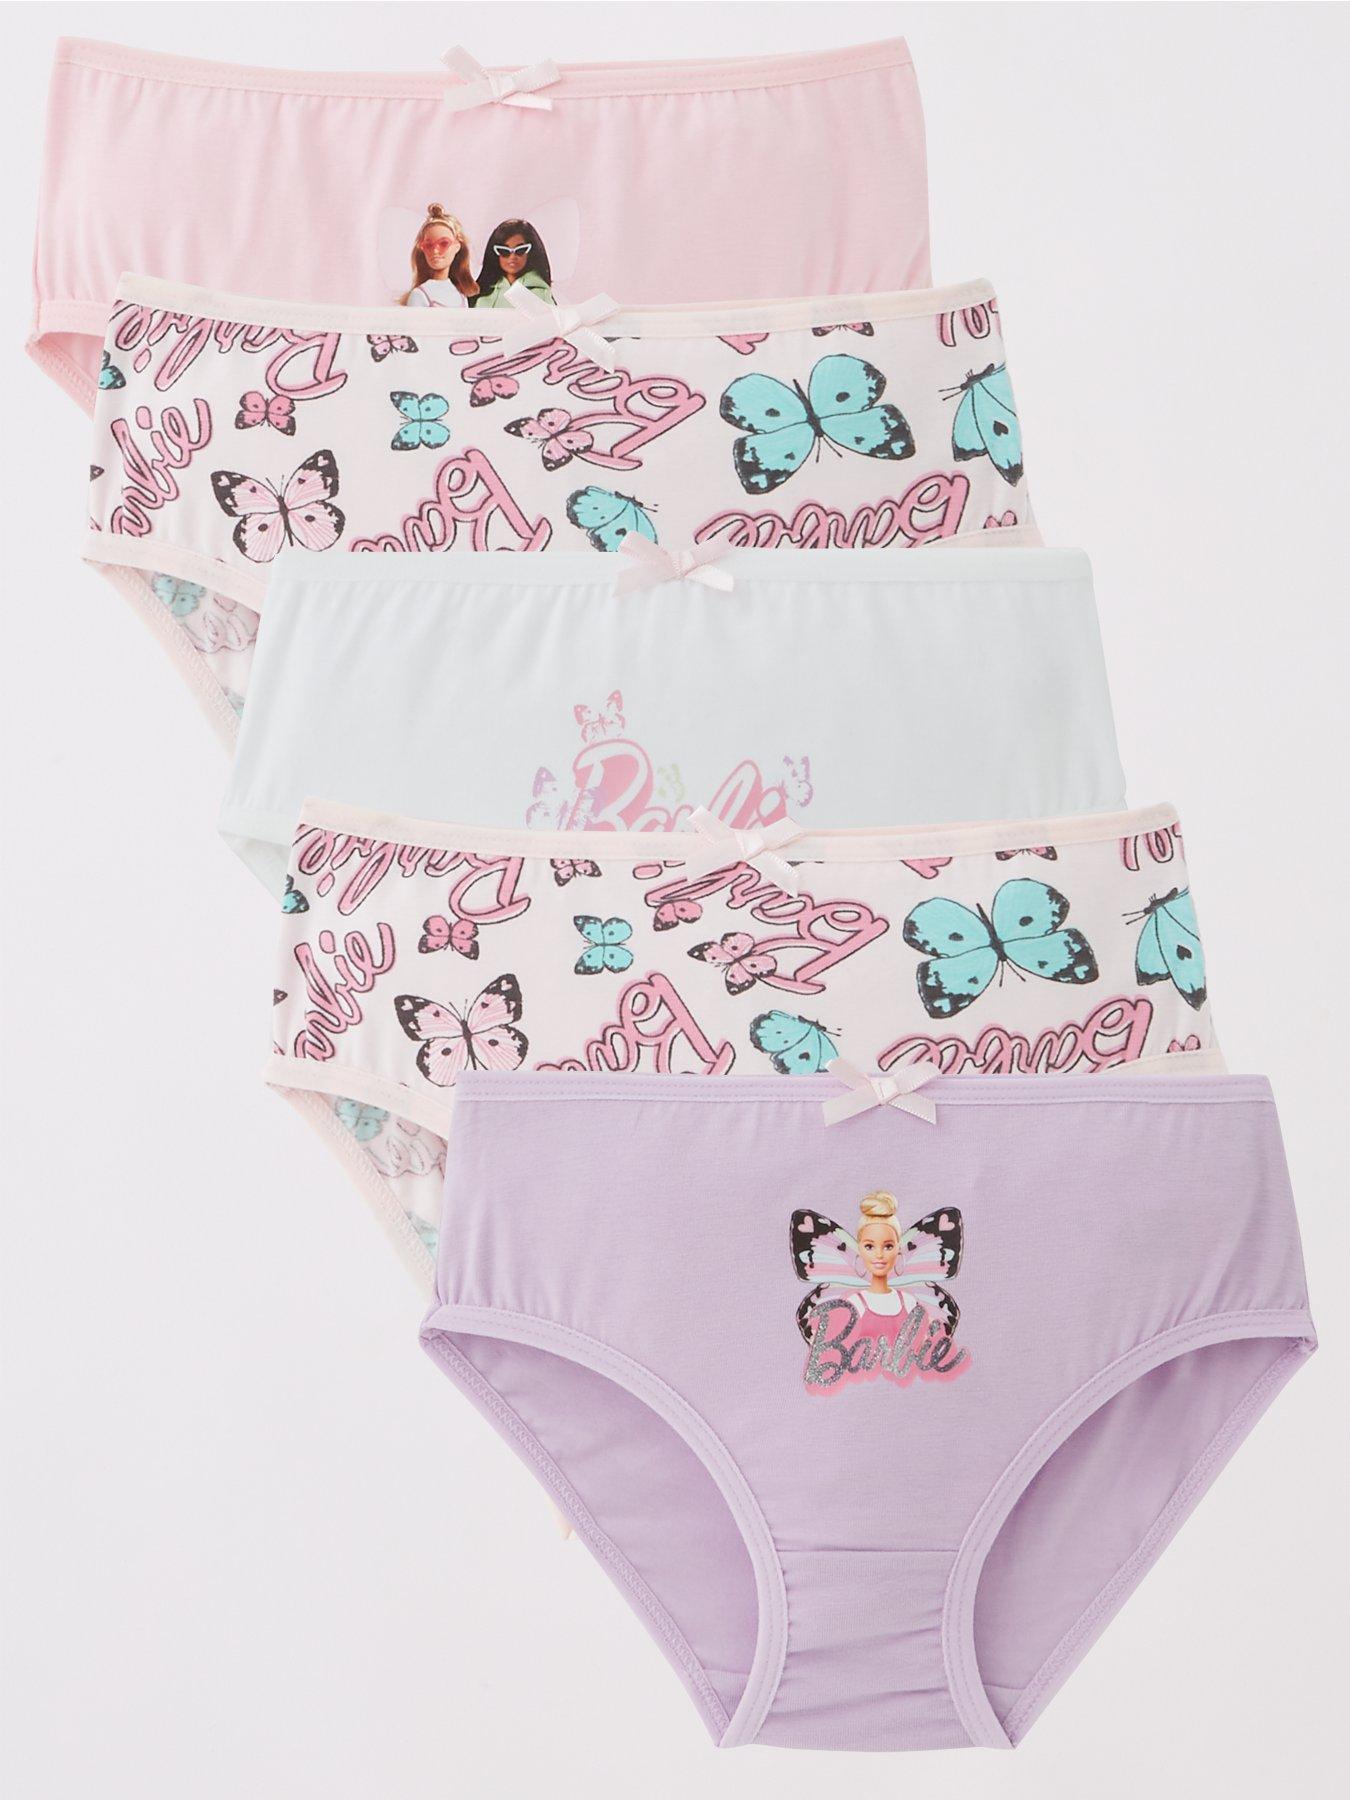 Minnie Mouse 8 Pairs Disney Cotton Panties and 50 similar items